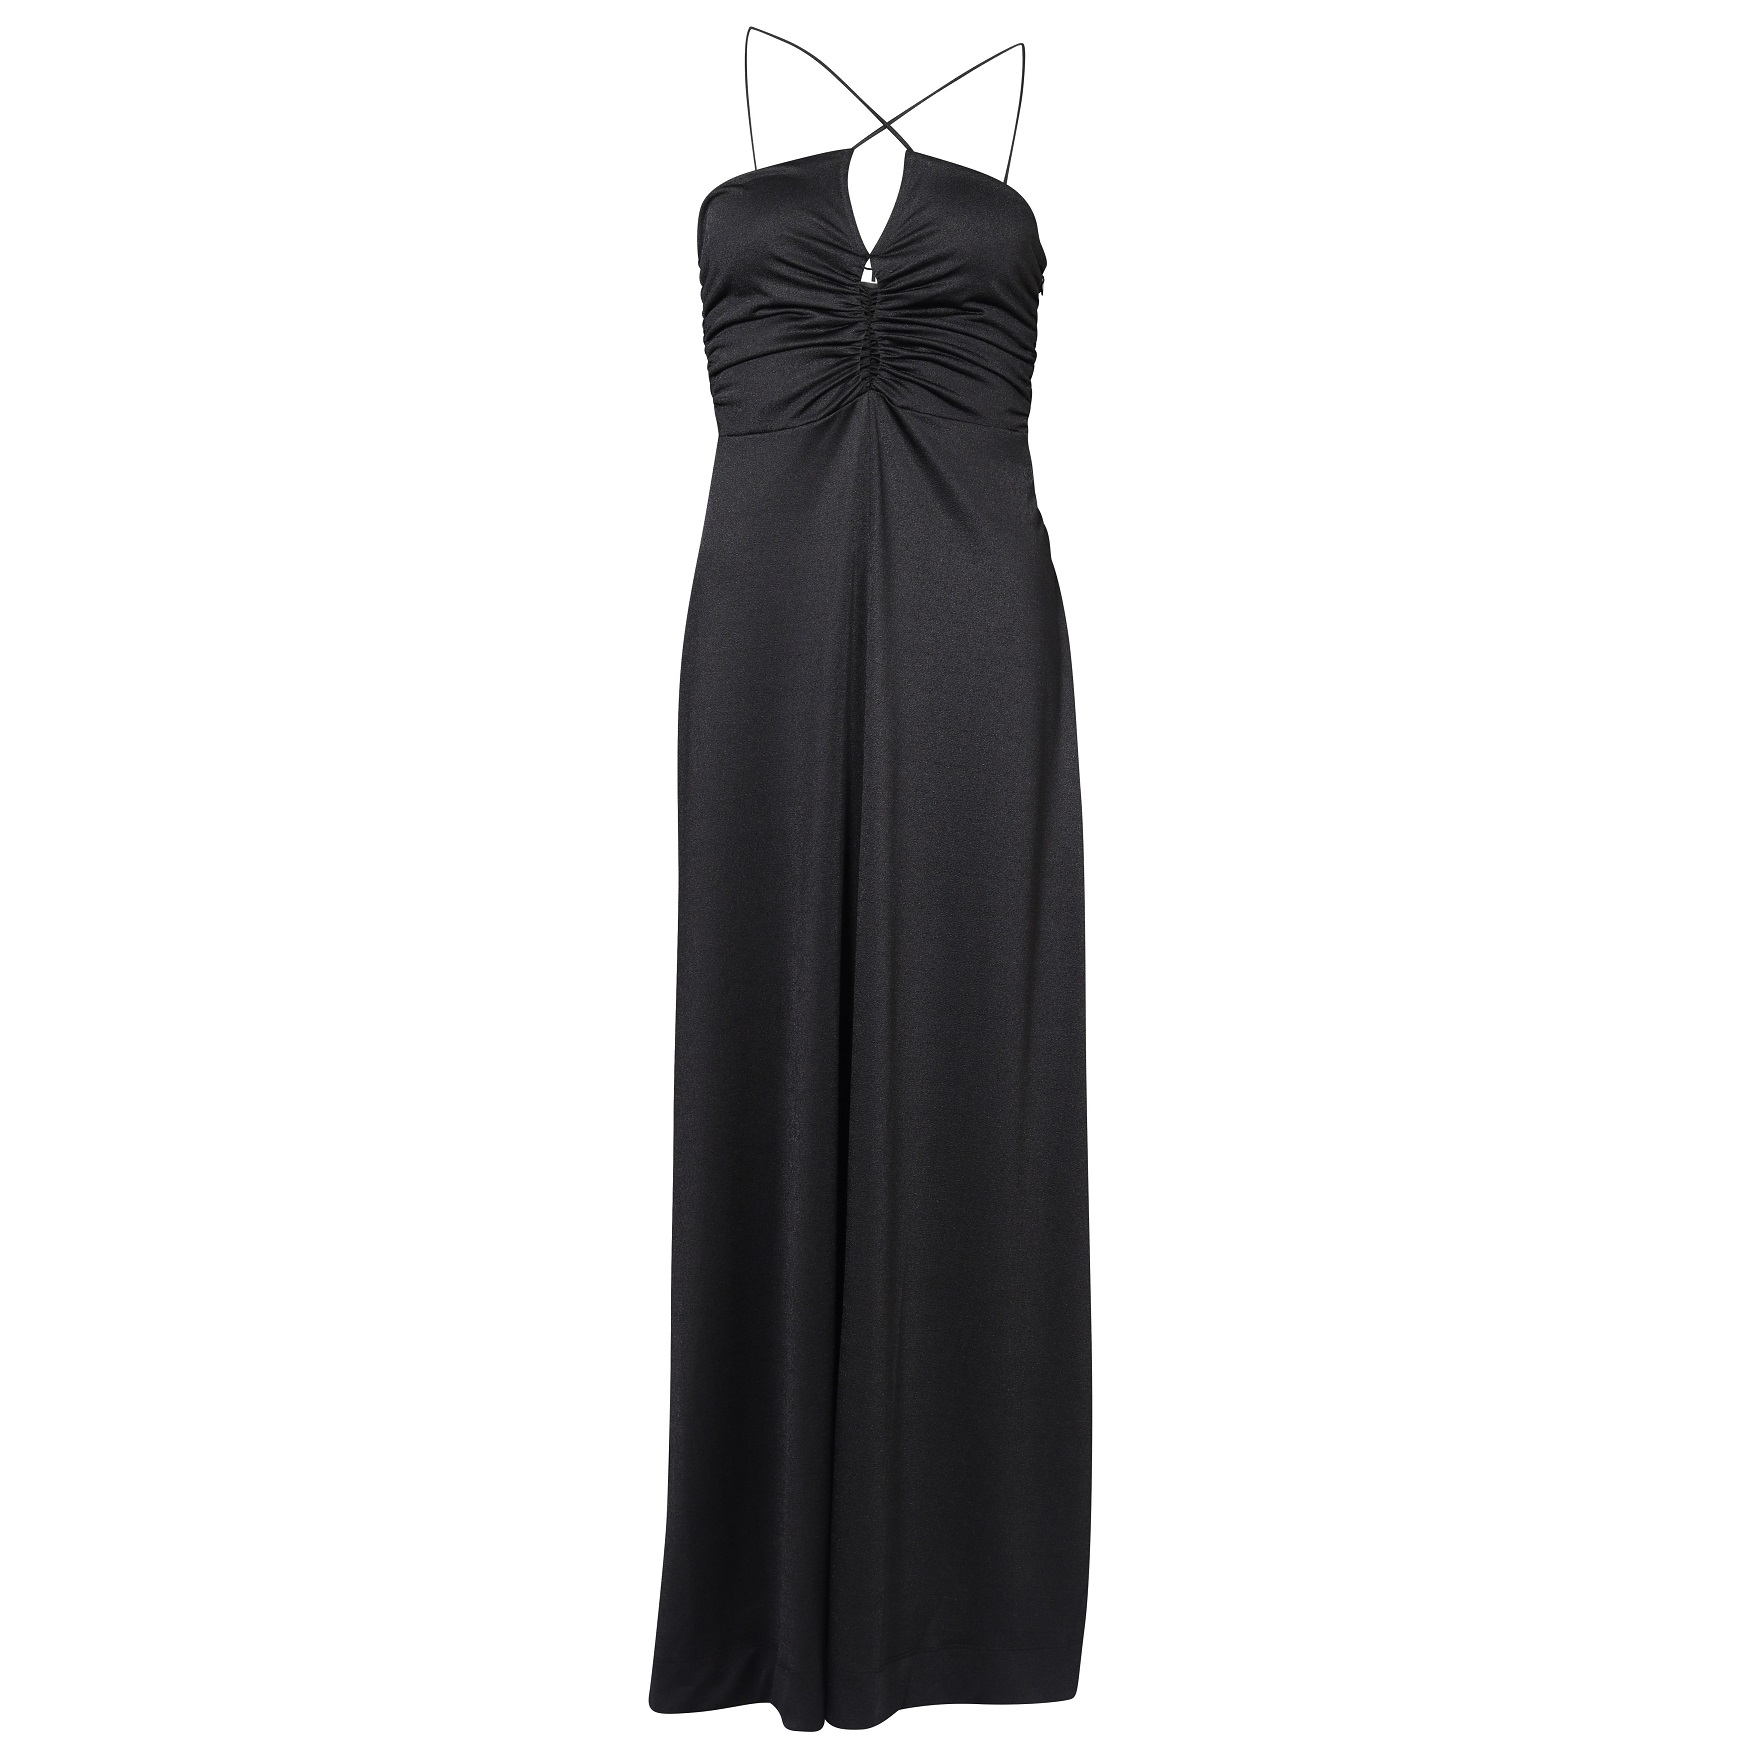 GANNI Shiny Crepe Jersey Dress in Black